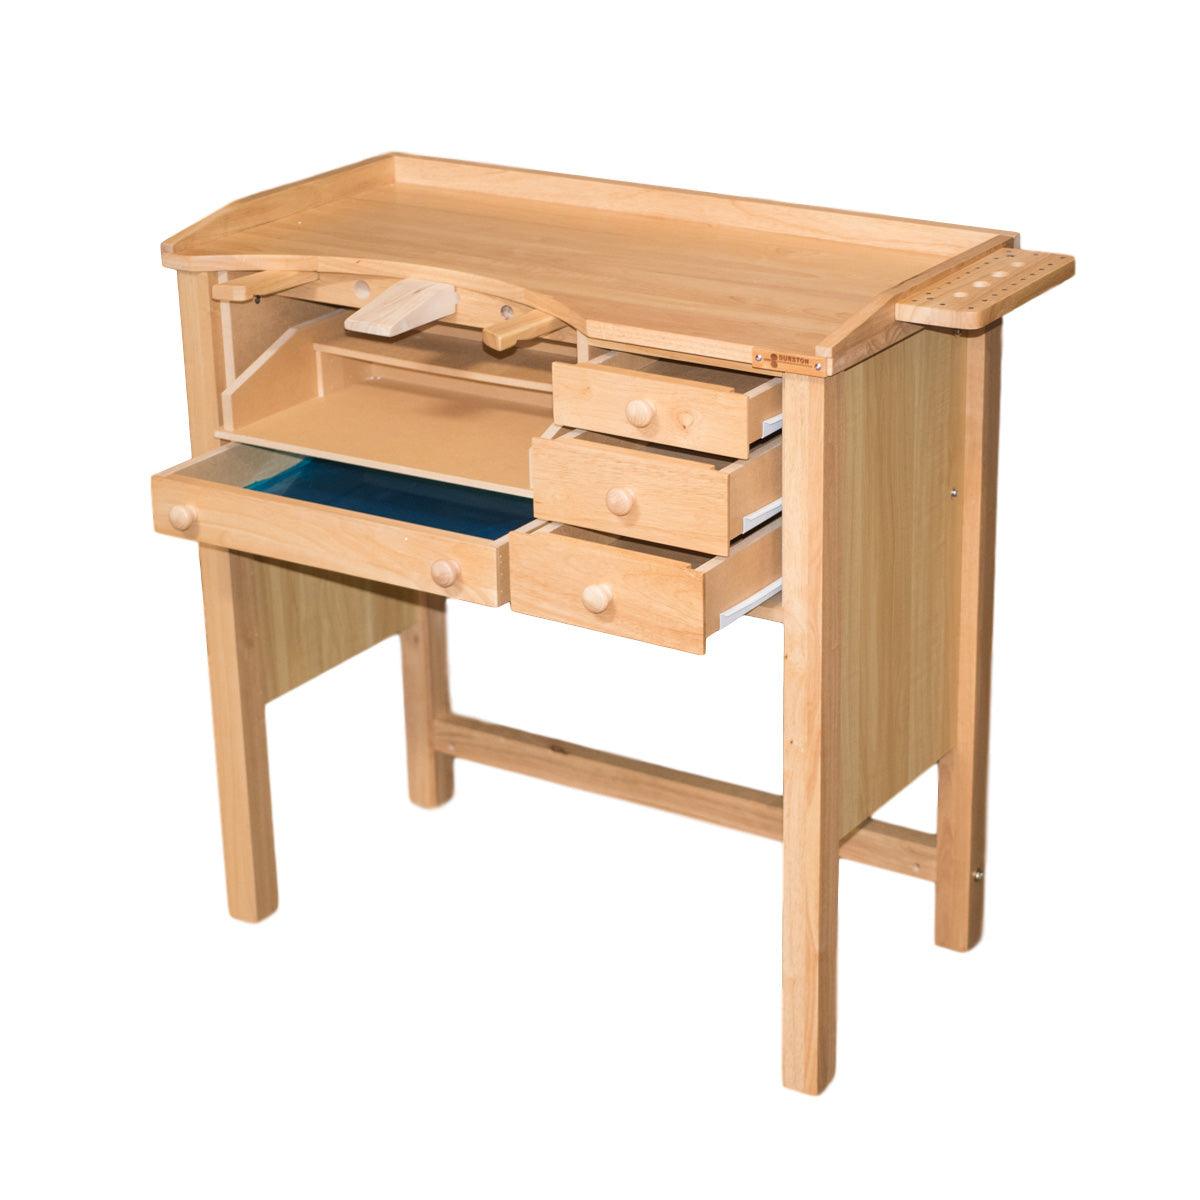 Hardwood Jeweler’s Workbench With Three Drawers